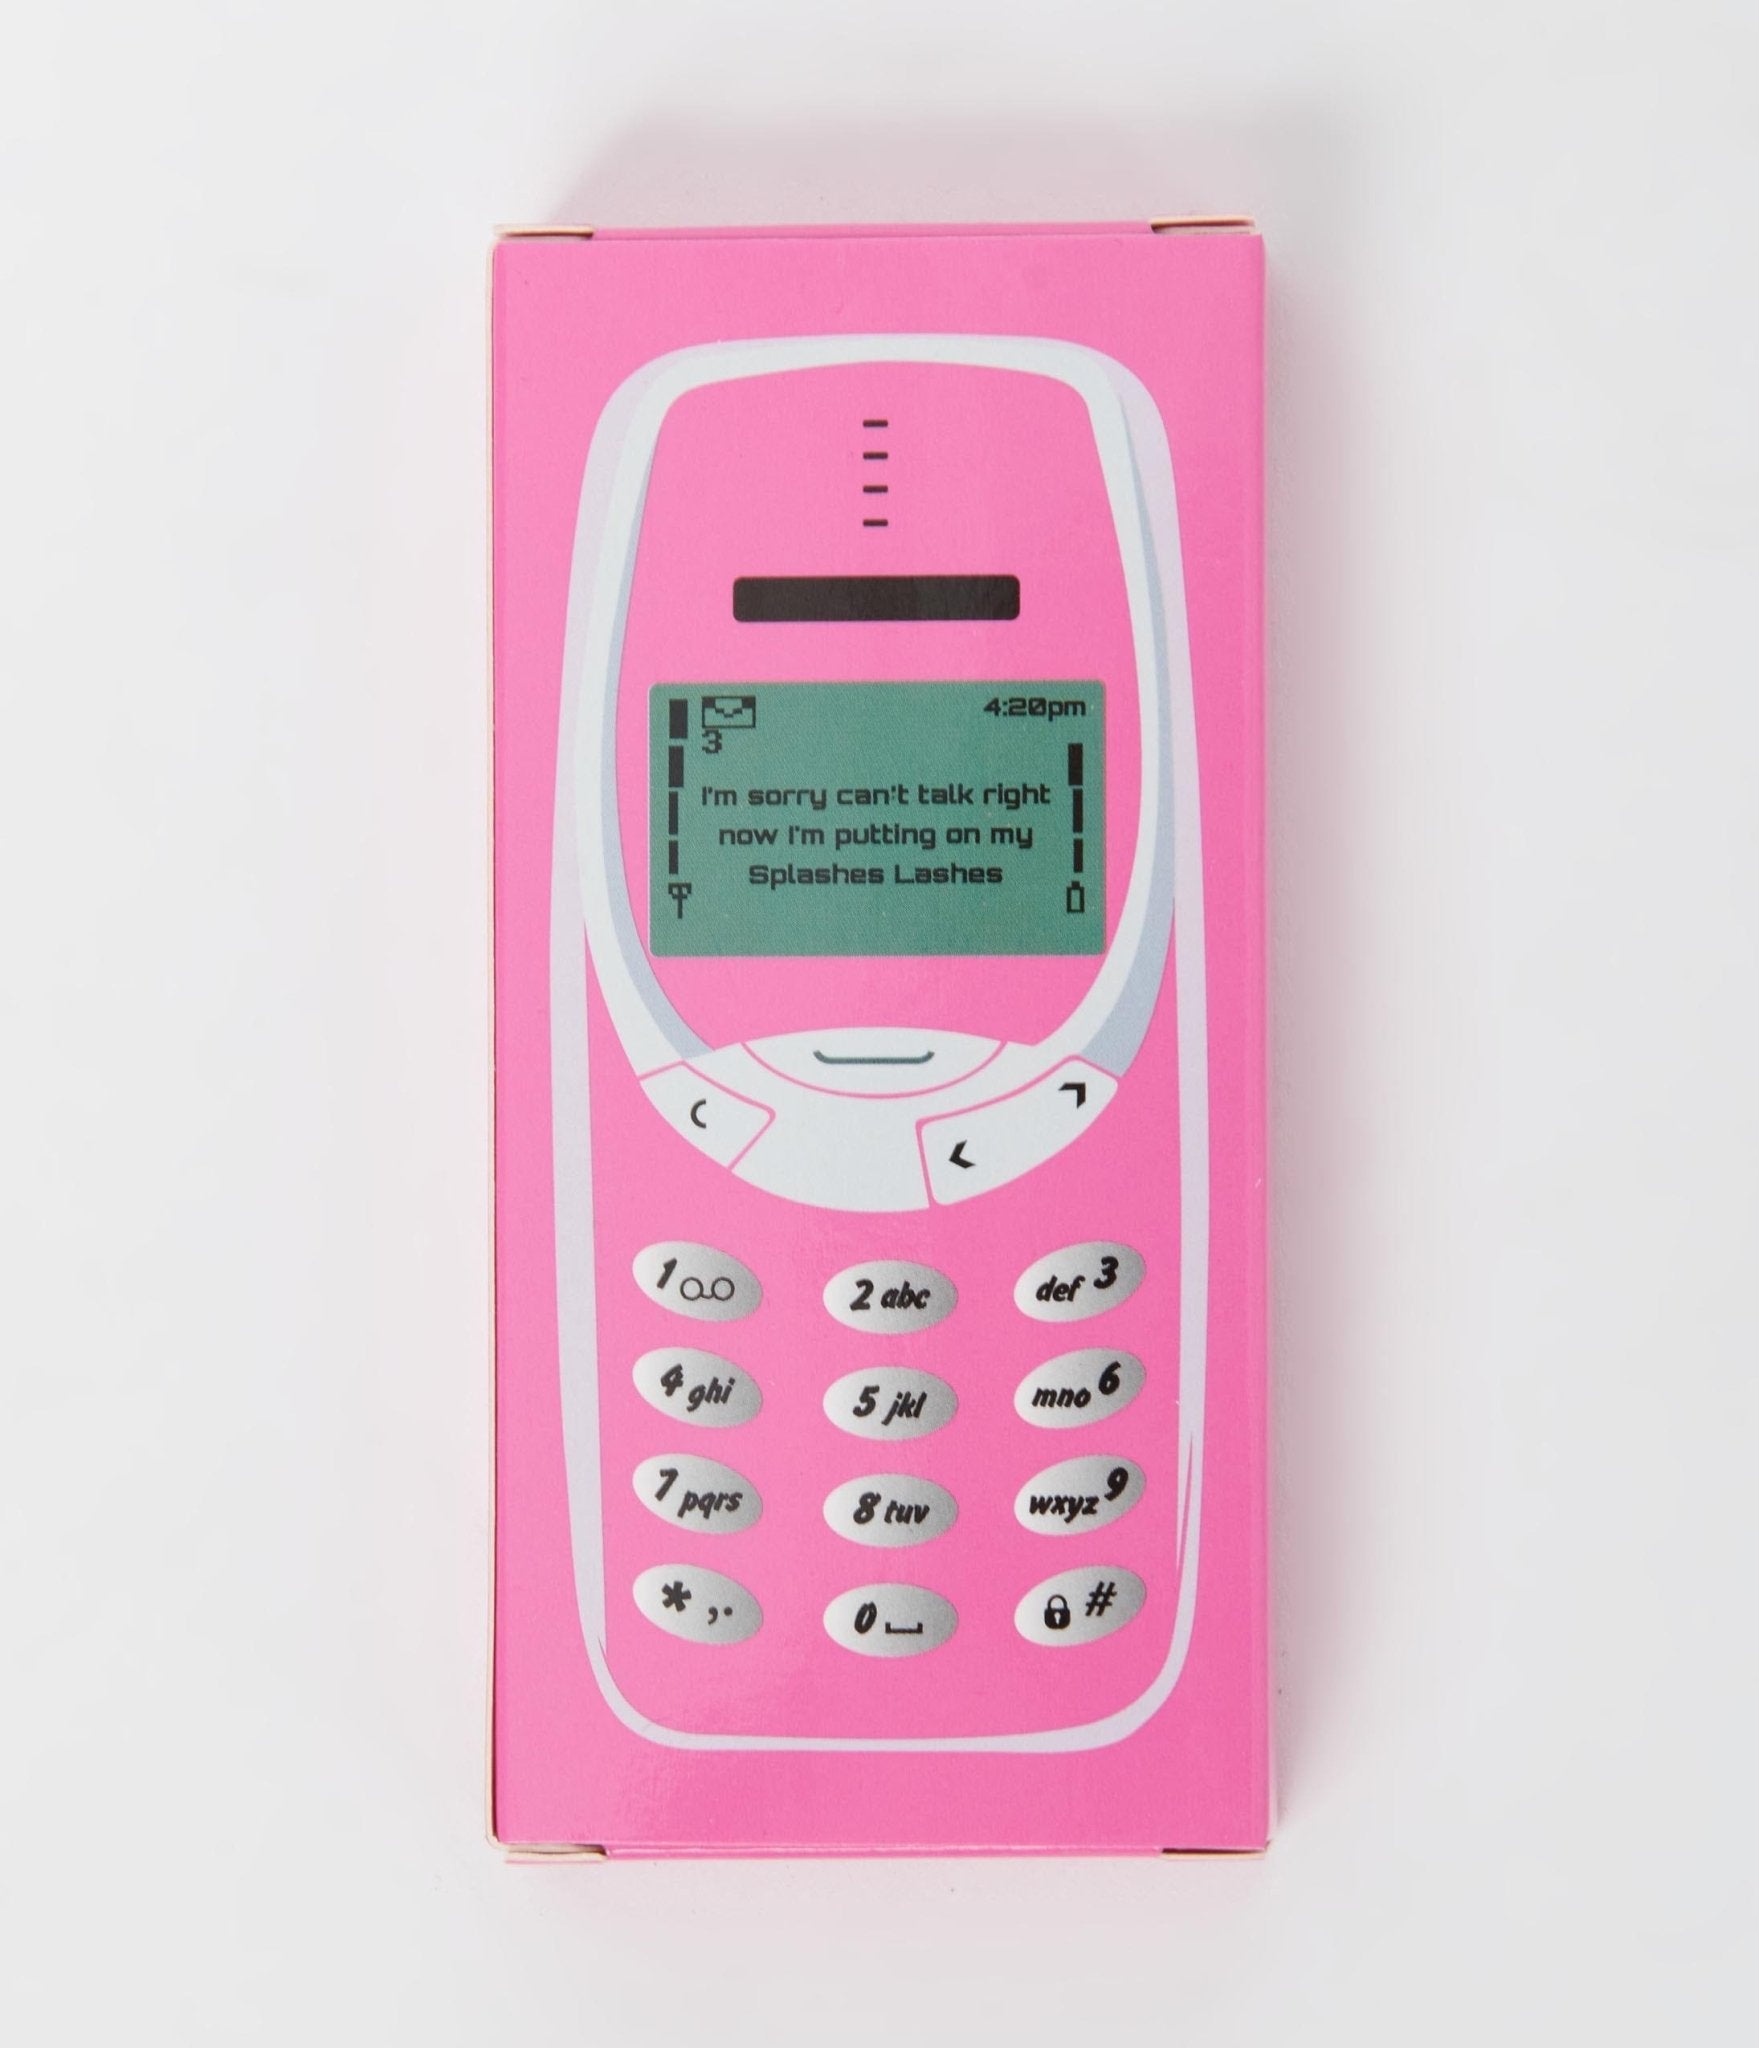 Nokia 3310 2020 GREY / BLUE - France, New - The wholesale platform